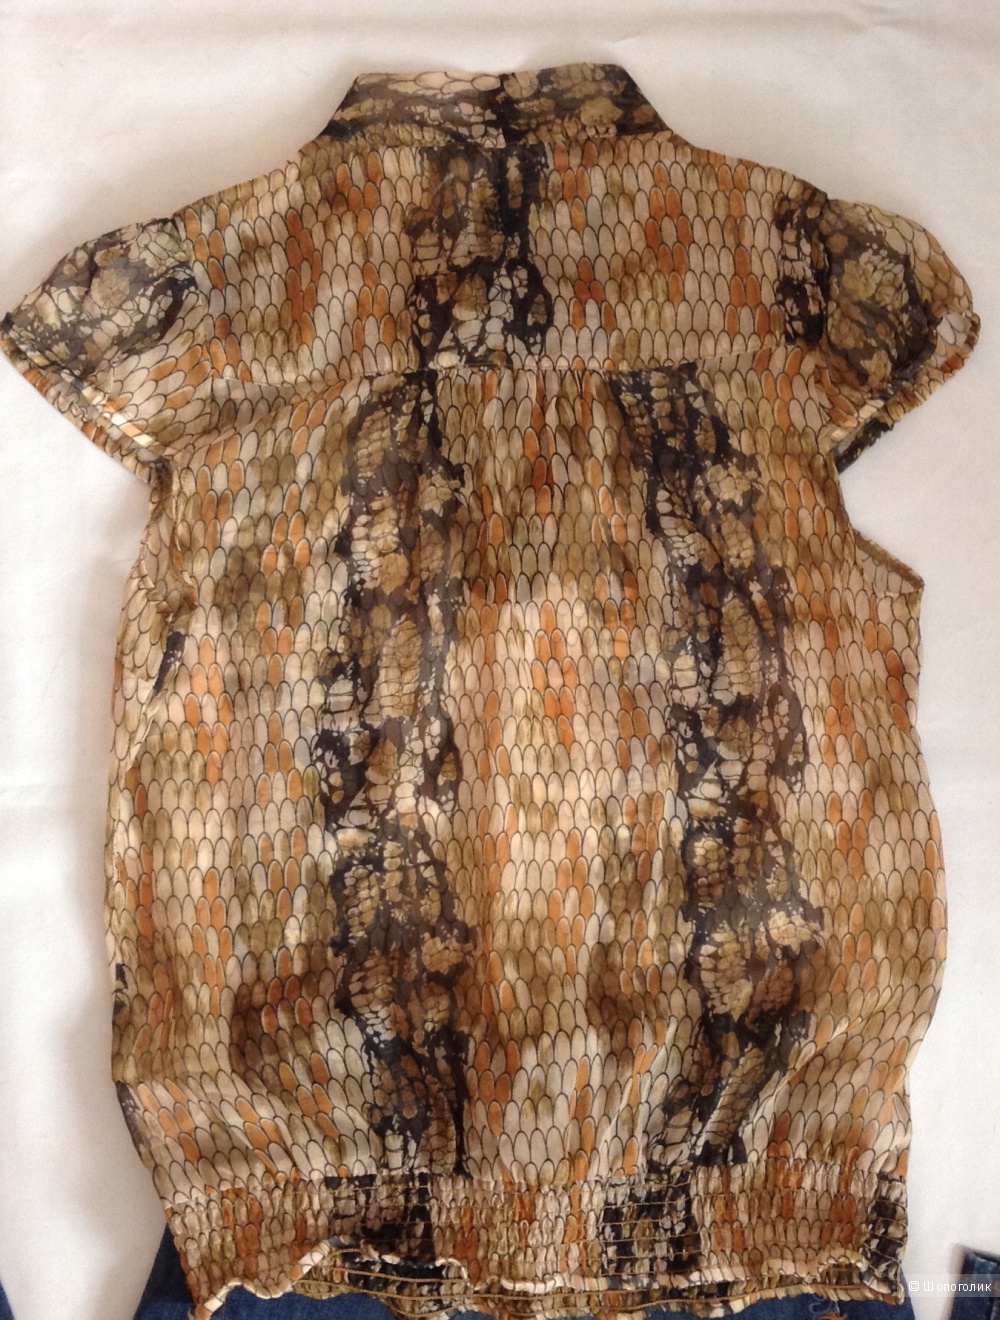 Блузка MINGEL , размер 46